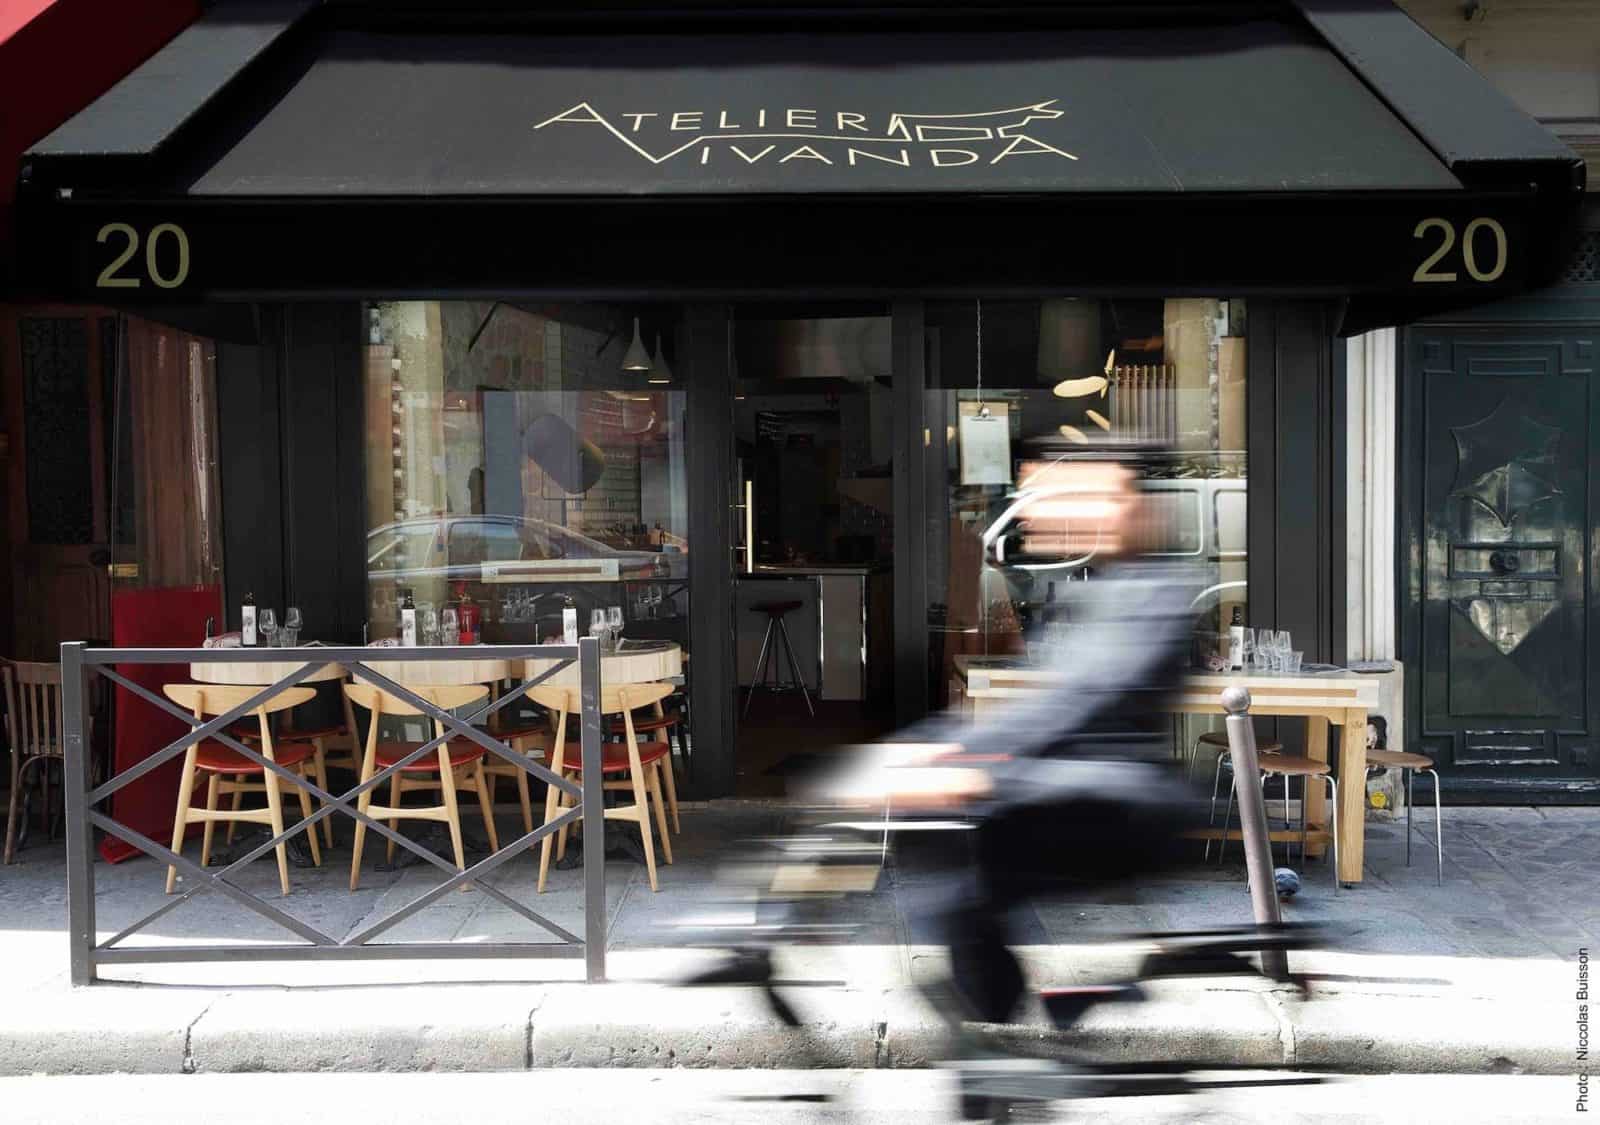 The terrace at Atelier Vivanda restaurant on rue du Cherche-Midi in Paris.